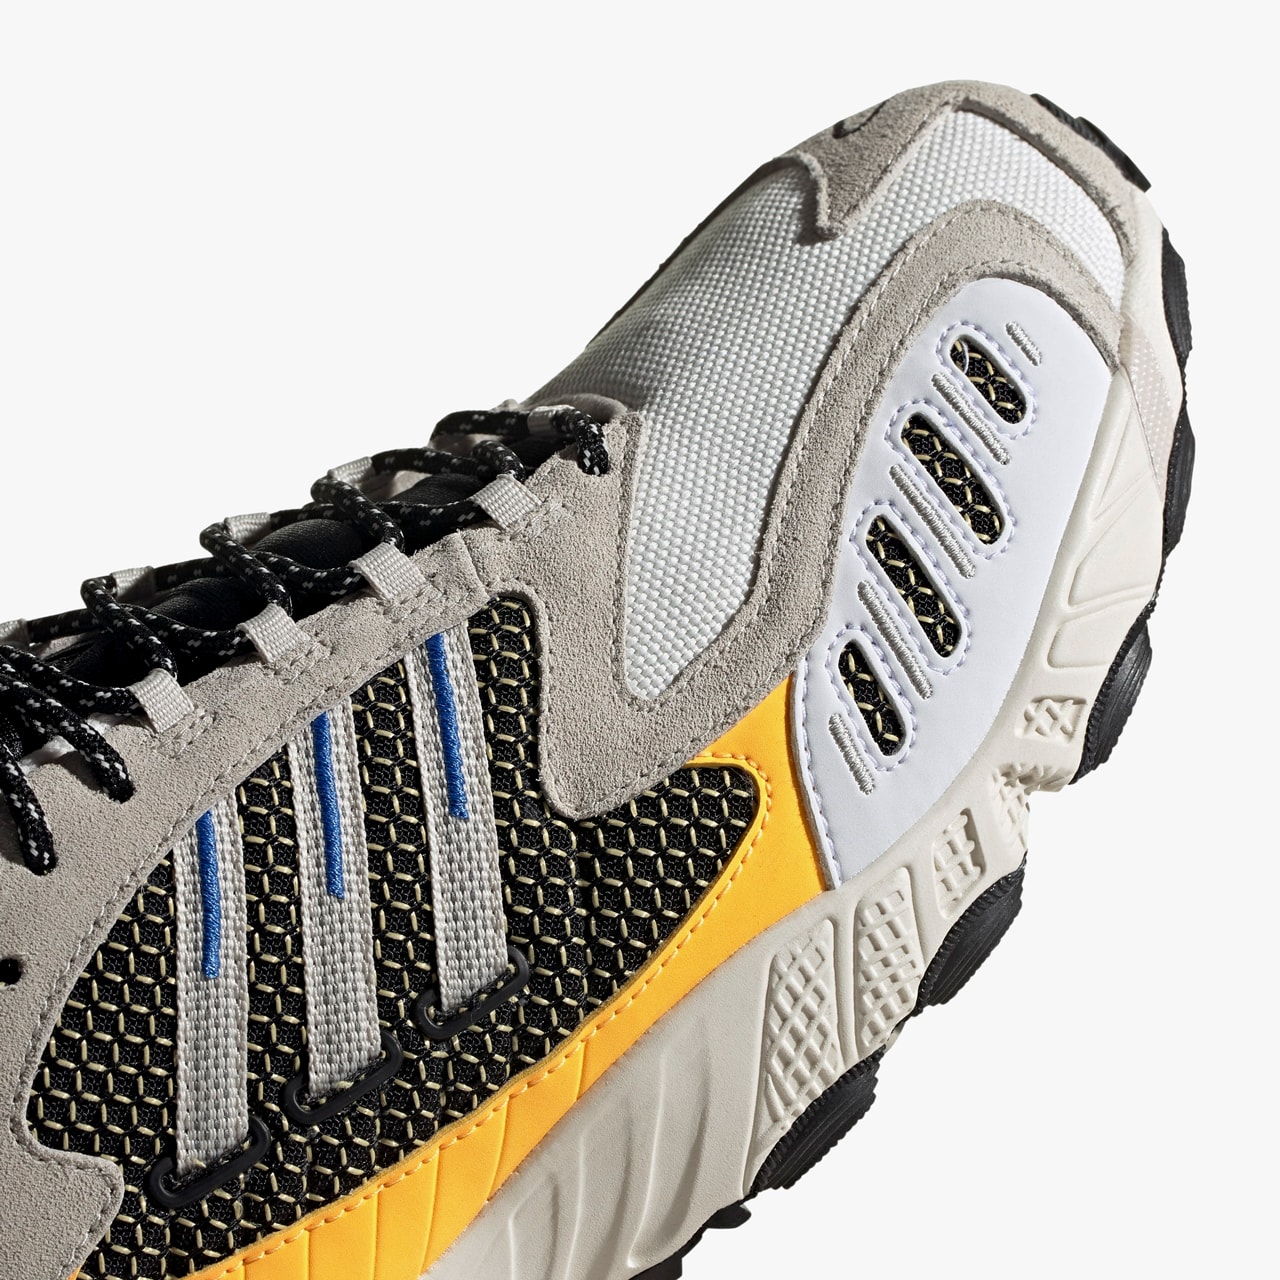 adidas originals torsion trdc core white bliss black yellow blue official release date info photos price store list